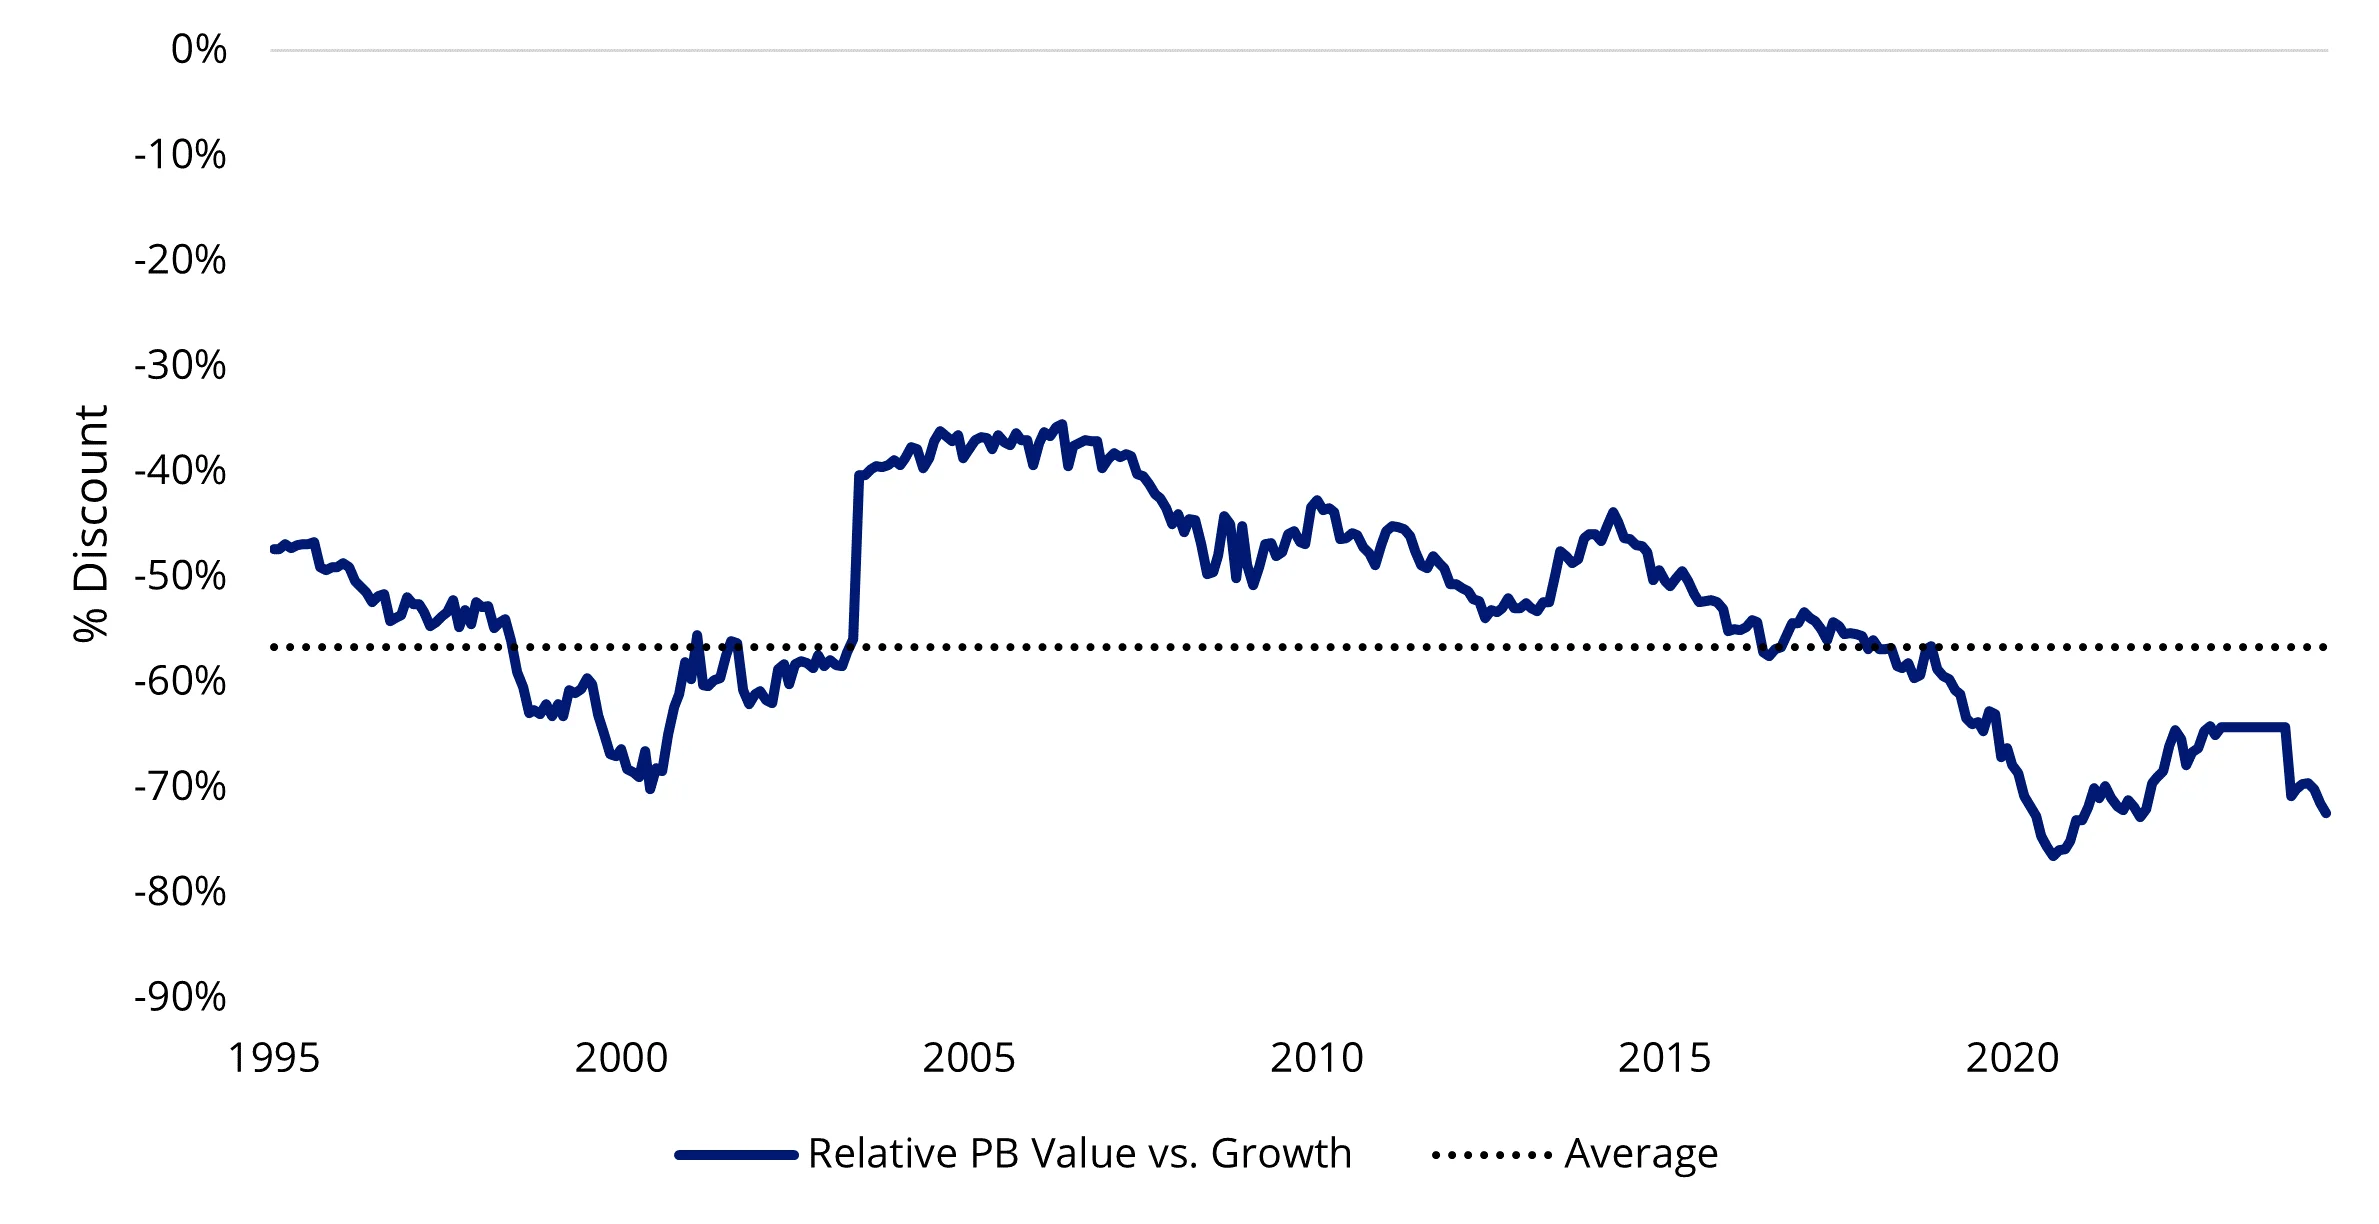 Price to Book Ratio (Value versus Growth)